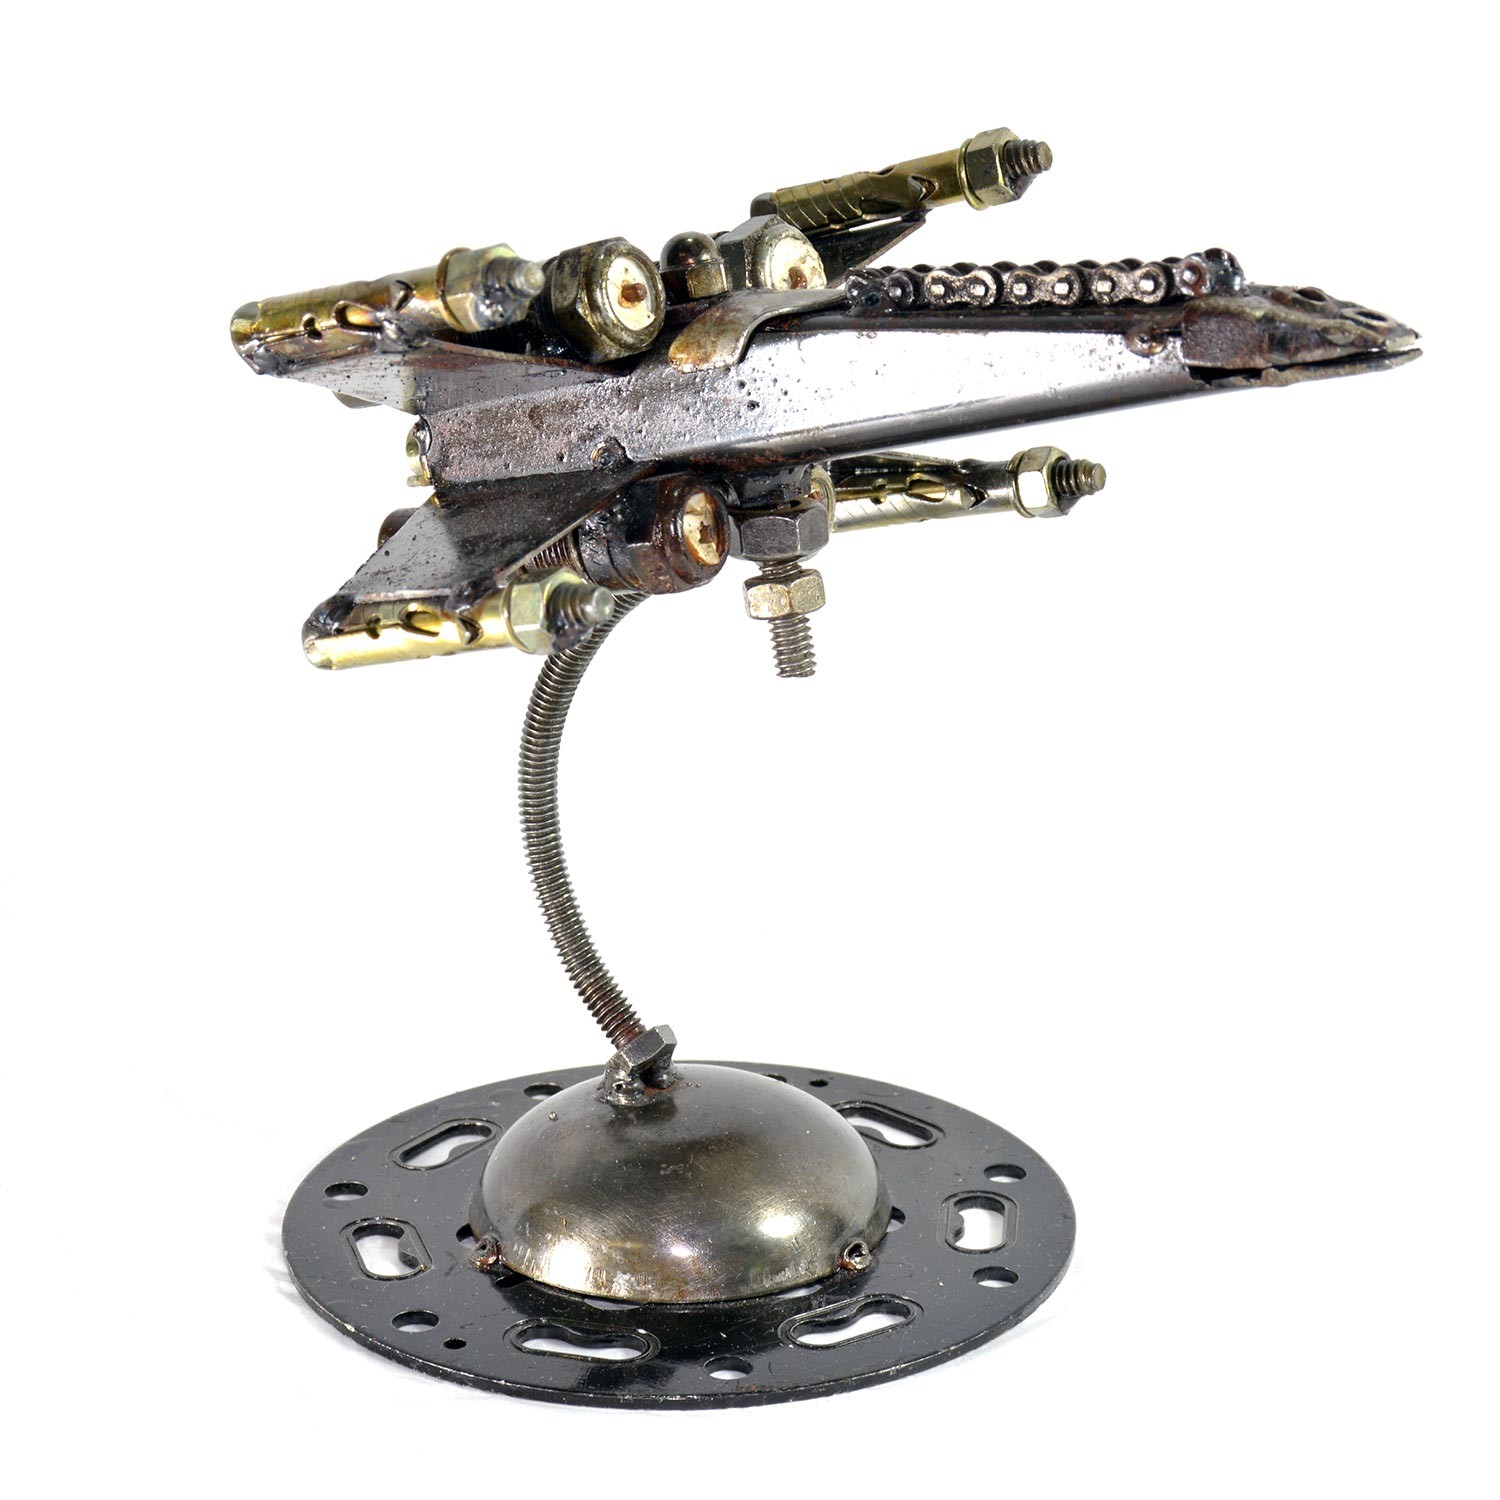 Star Wars X-Wing Spaceship Metal Sculpture Model | Star Wars Statue Gift